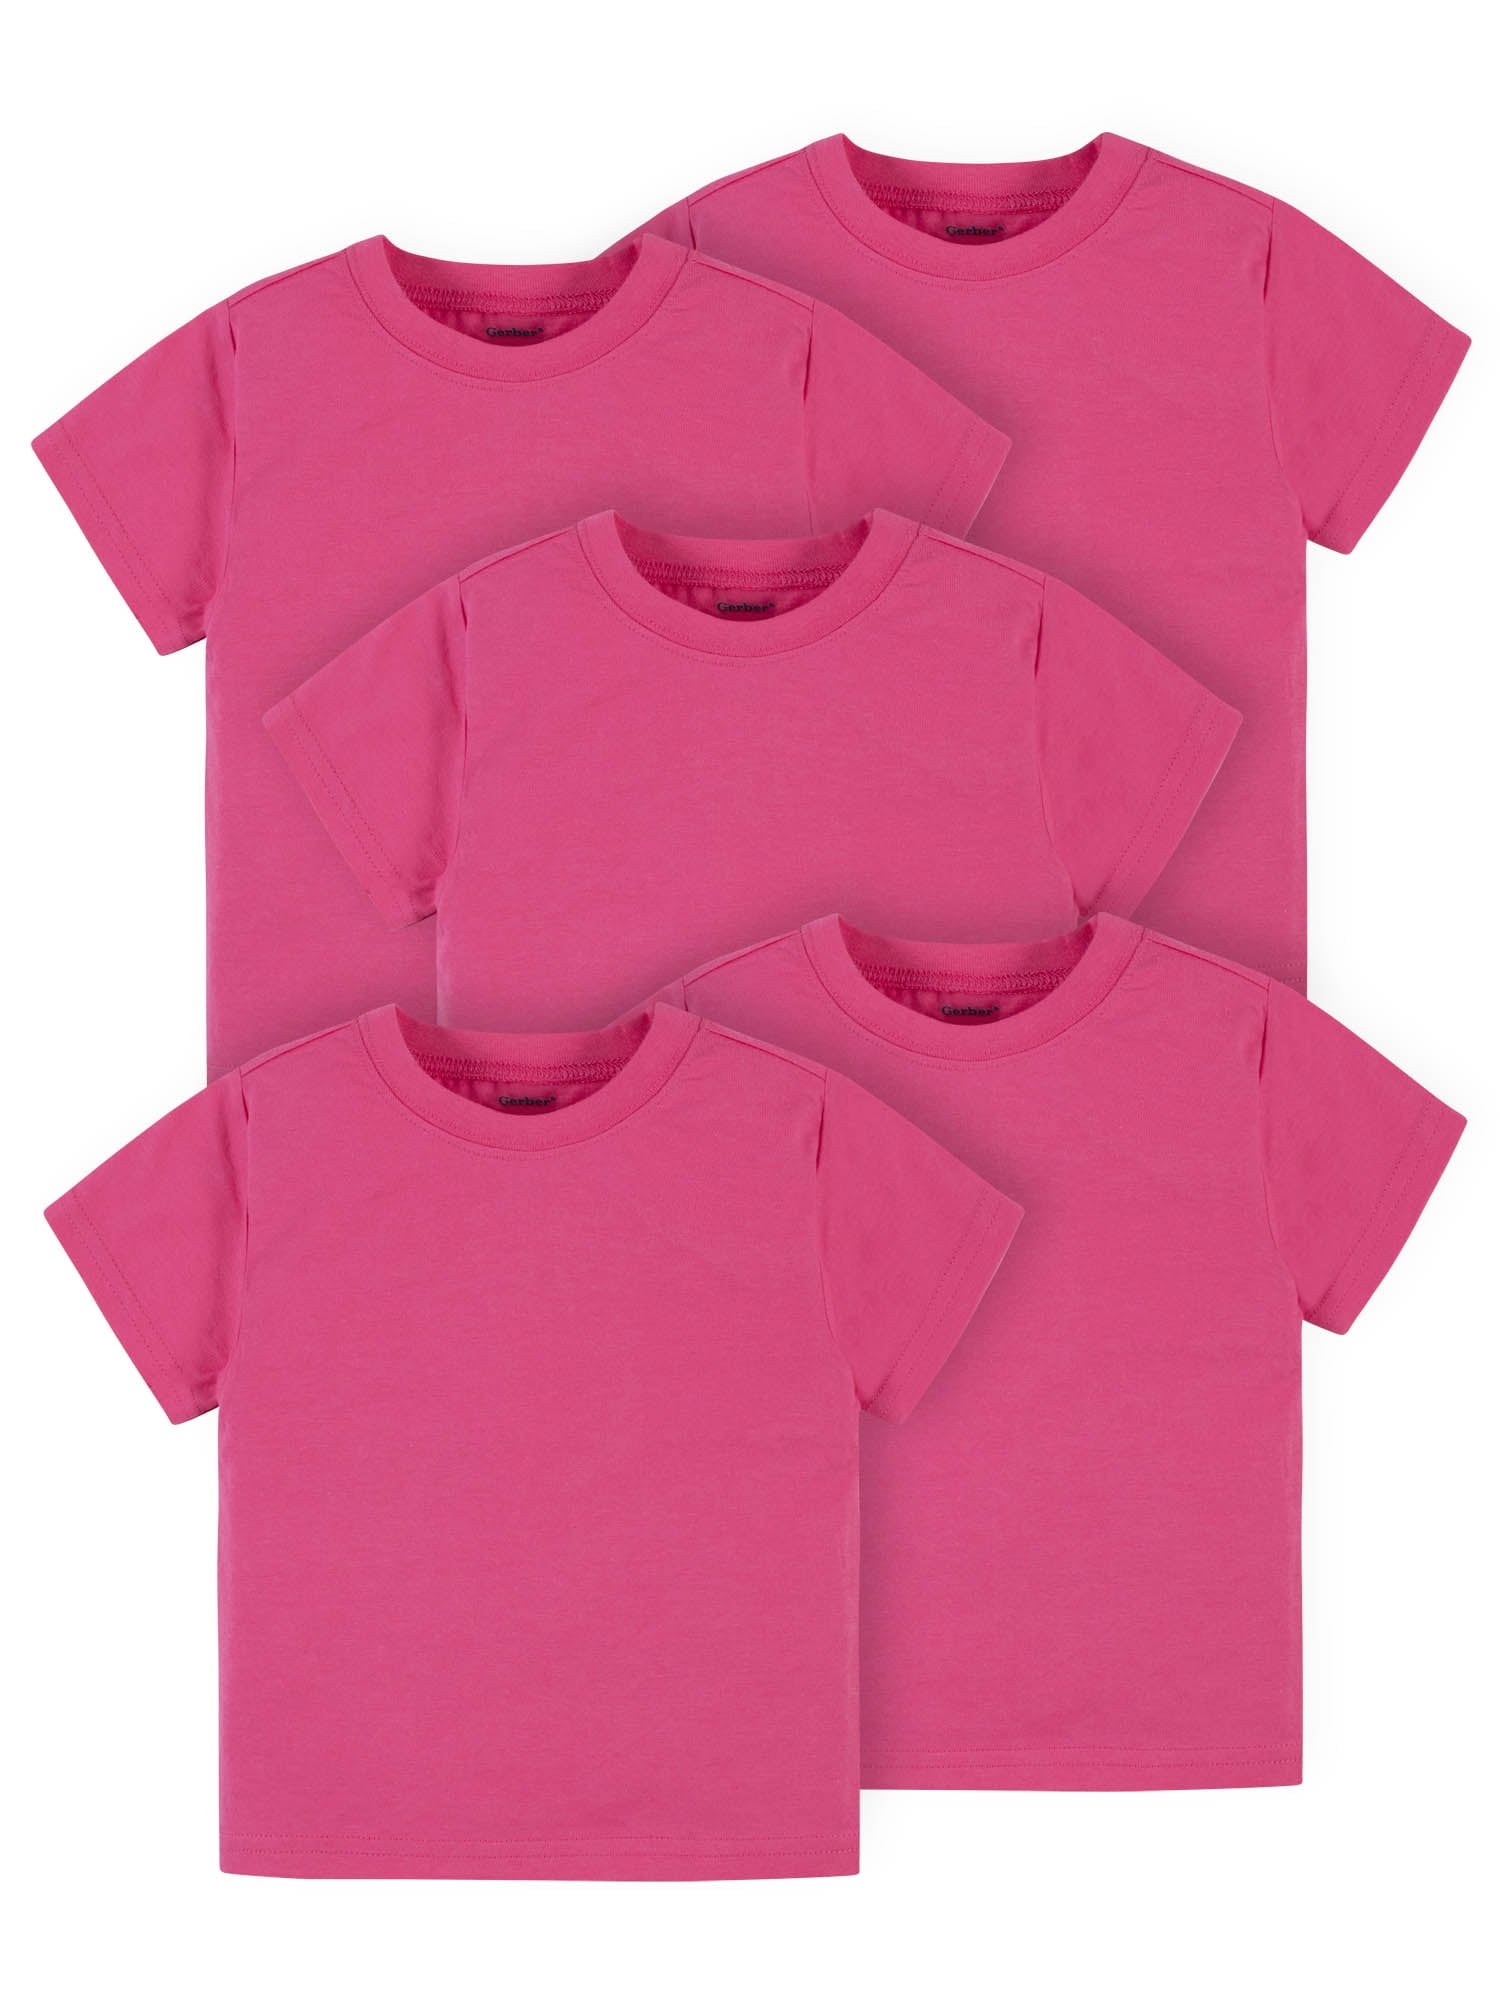 Baby Girls T-shirt Top 100% Soft Cotton Short Sleeve Pink Size 6 12 18 Months 